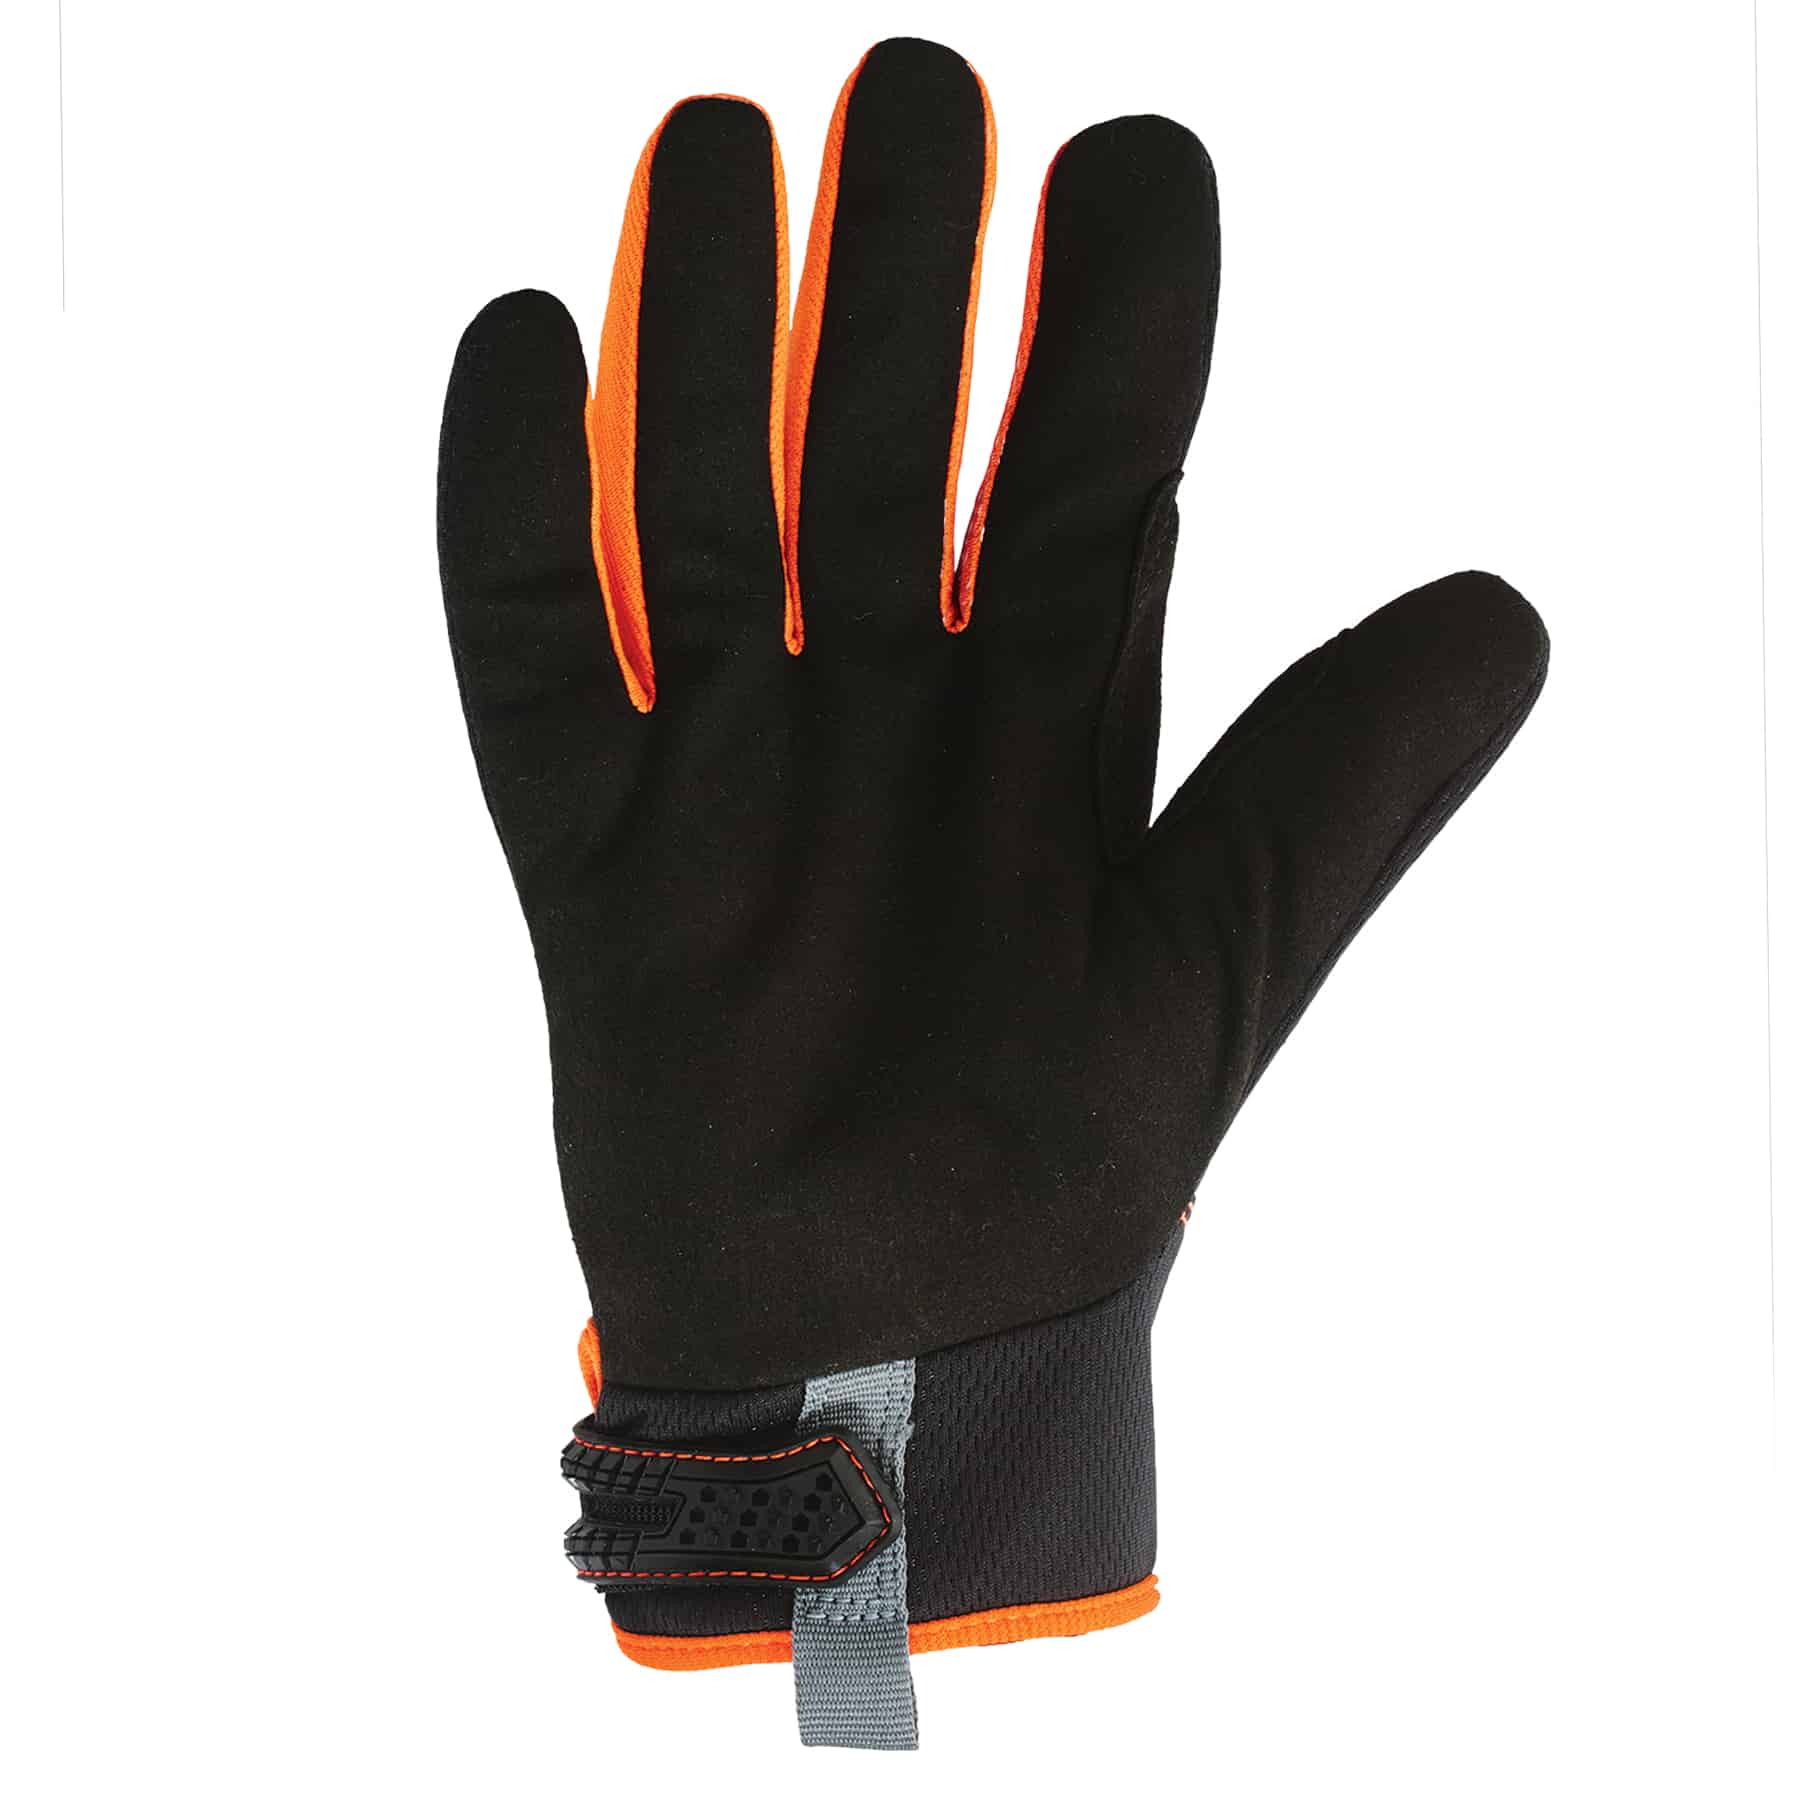 NWT Ergodyne ProFlex Handler Utility Gloves #812 Large EGO 16274 